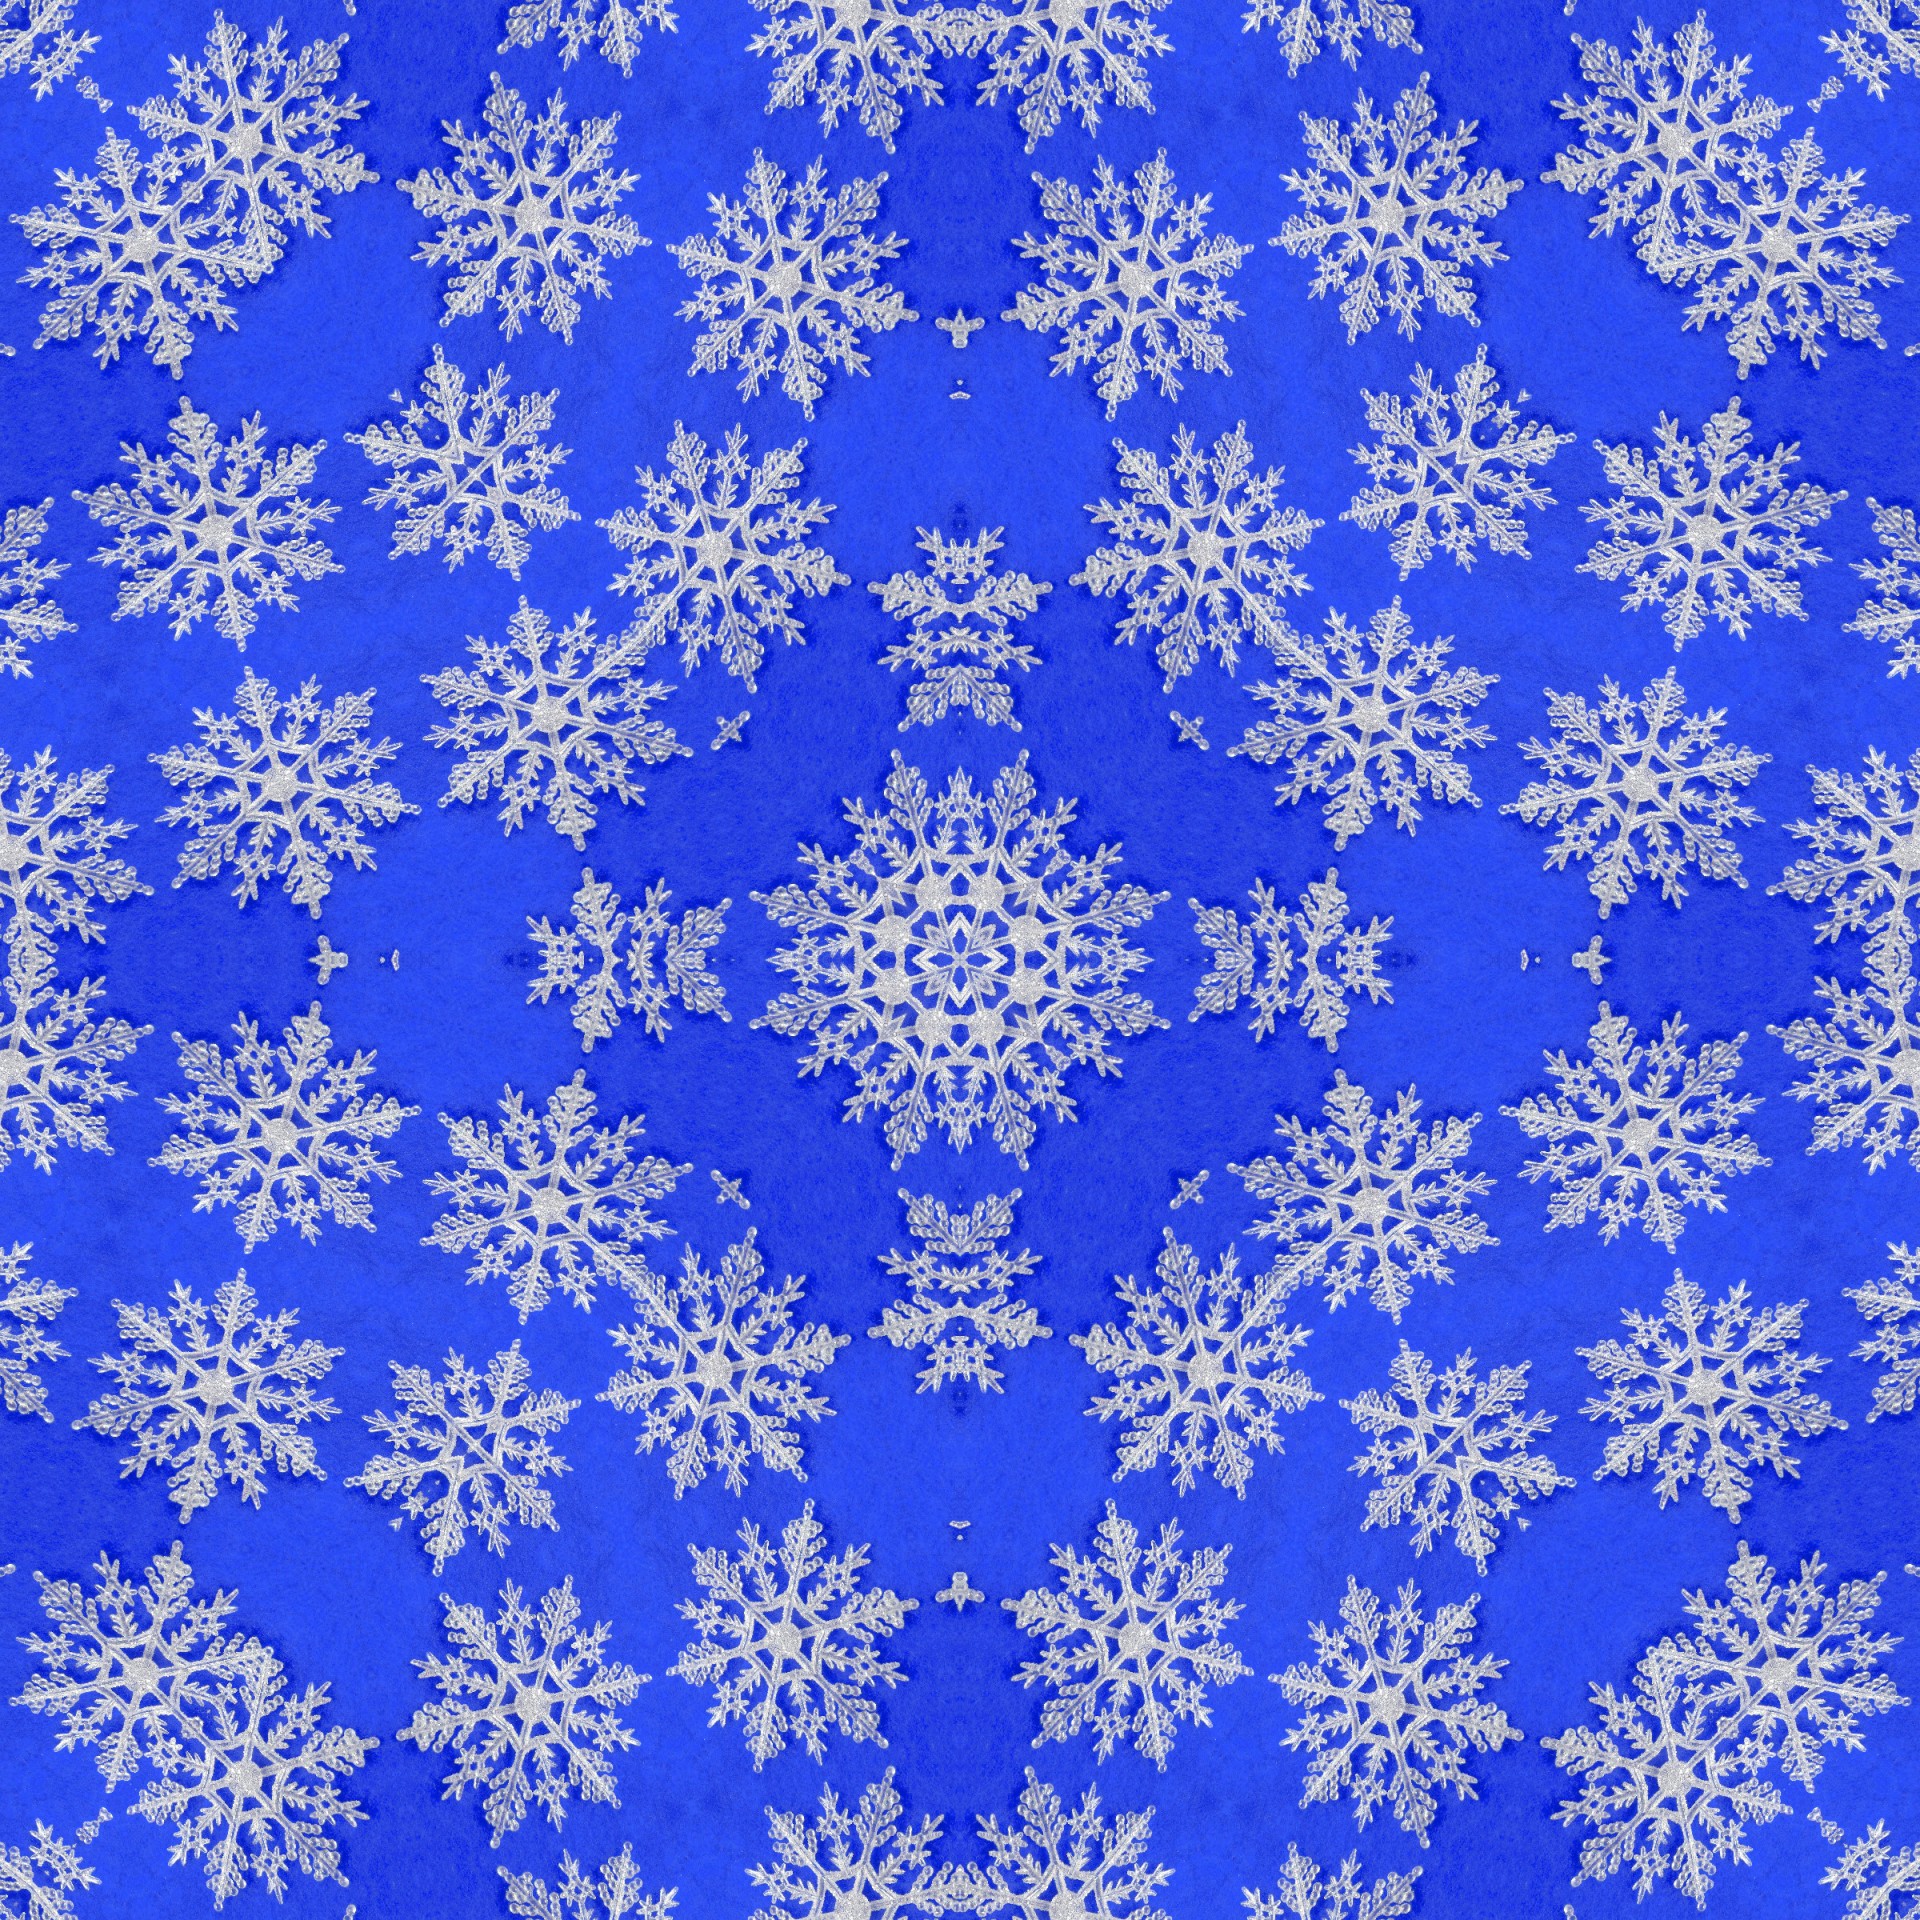 Snowflake (7)